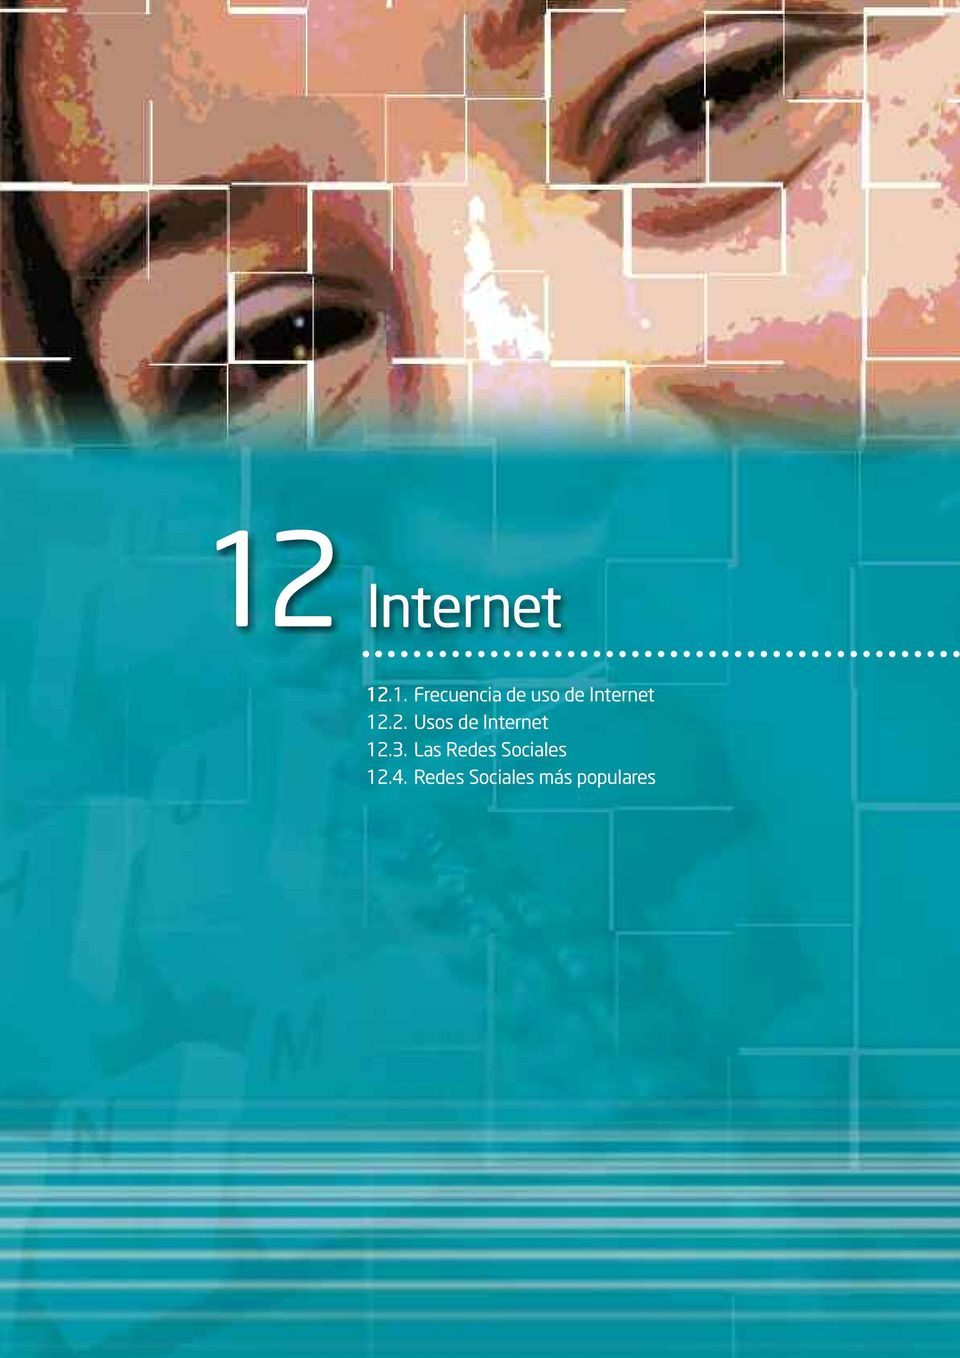 2. Usos de Internet 12.3.